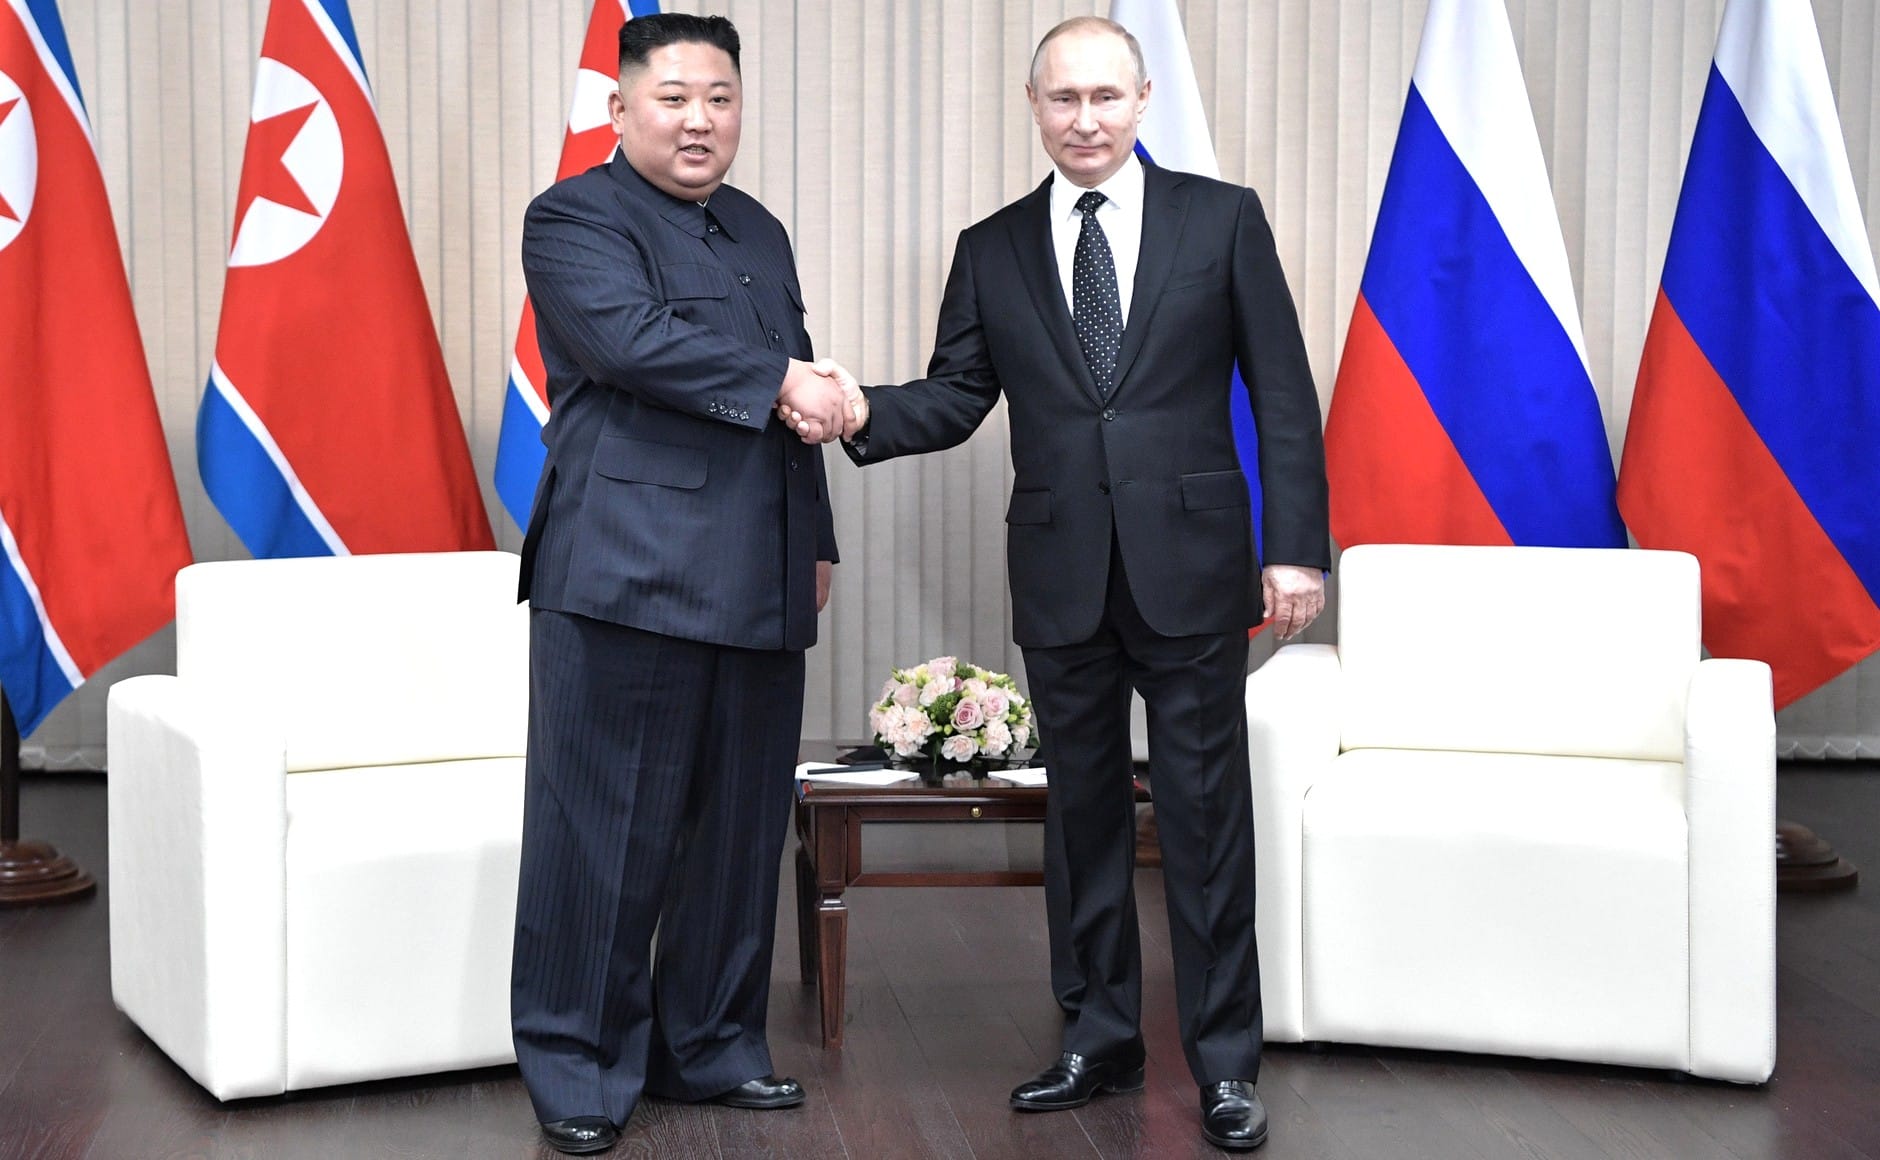 Kim Traveling to Russia to Meet Putin, US Threatens Response